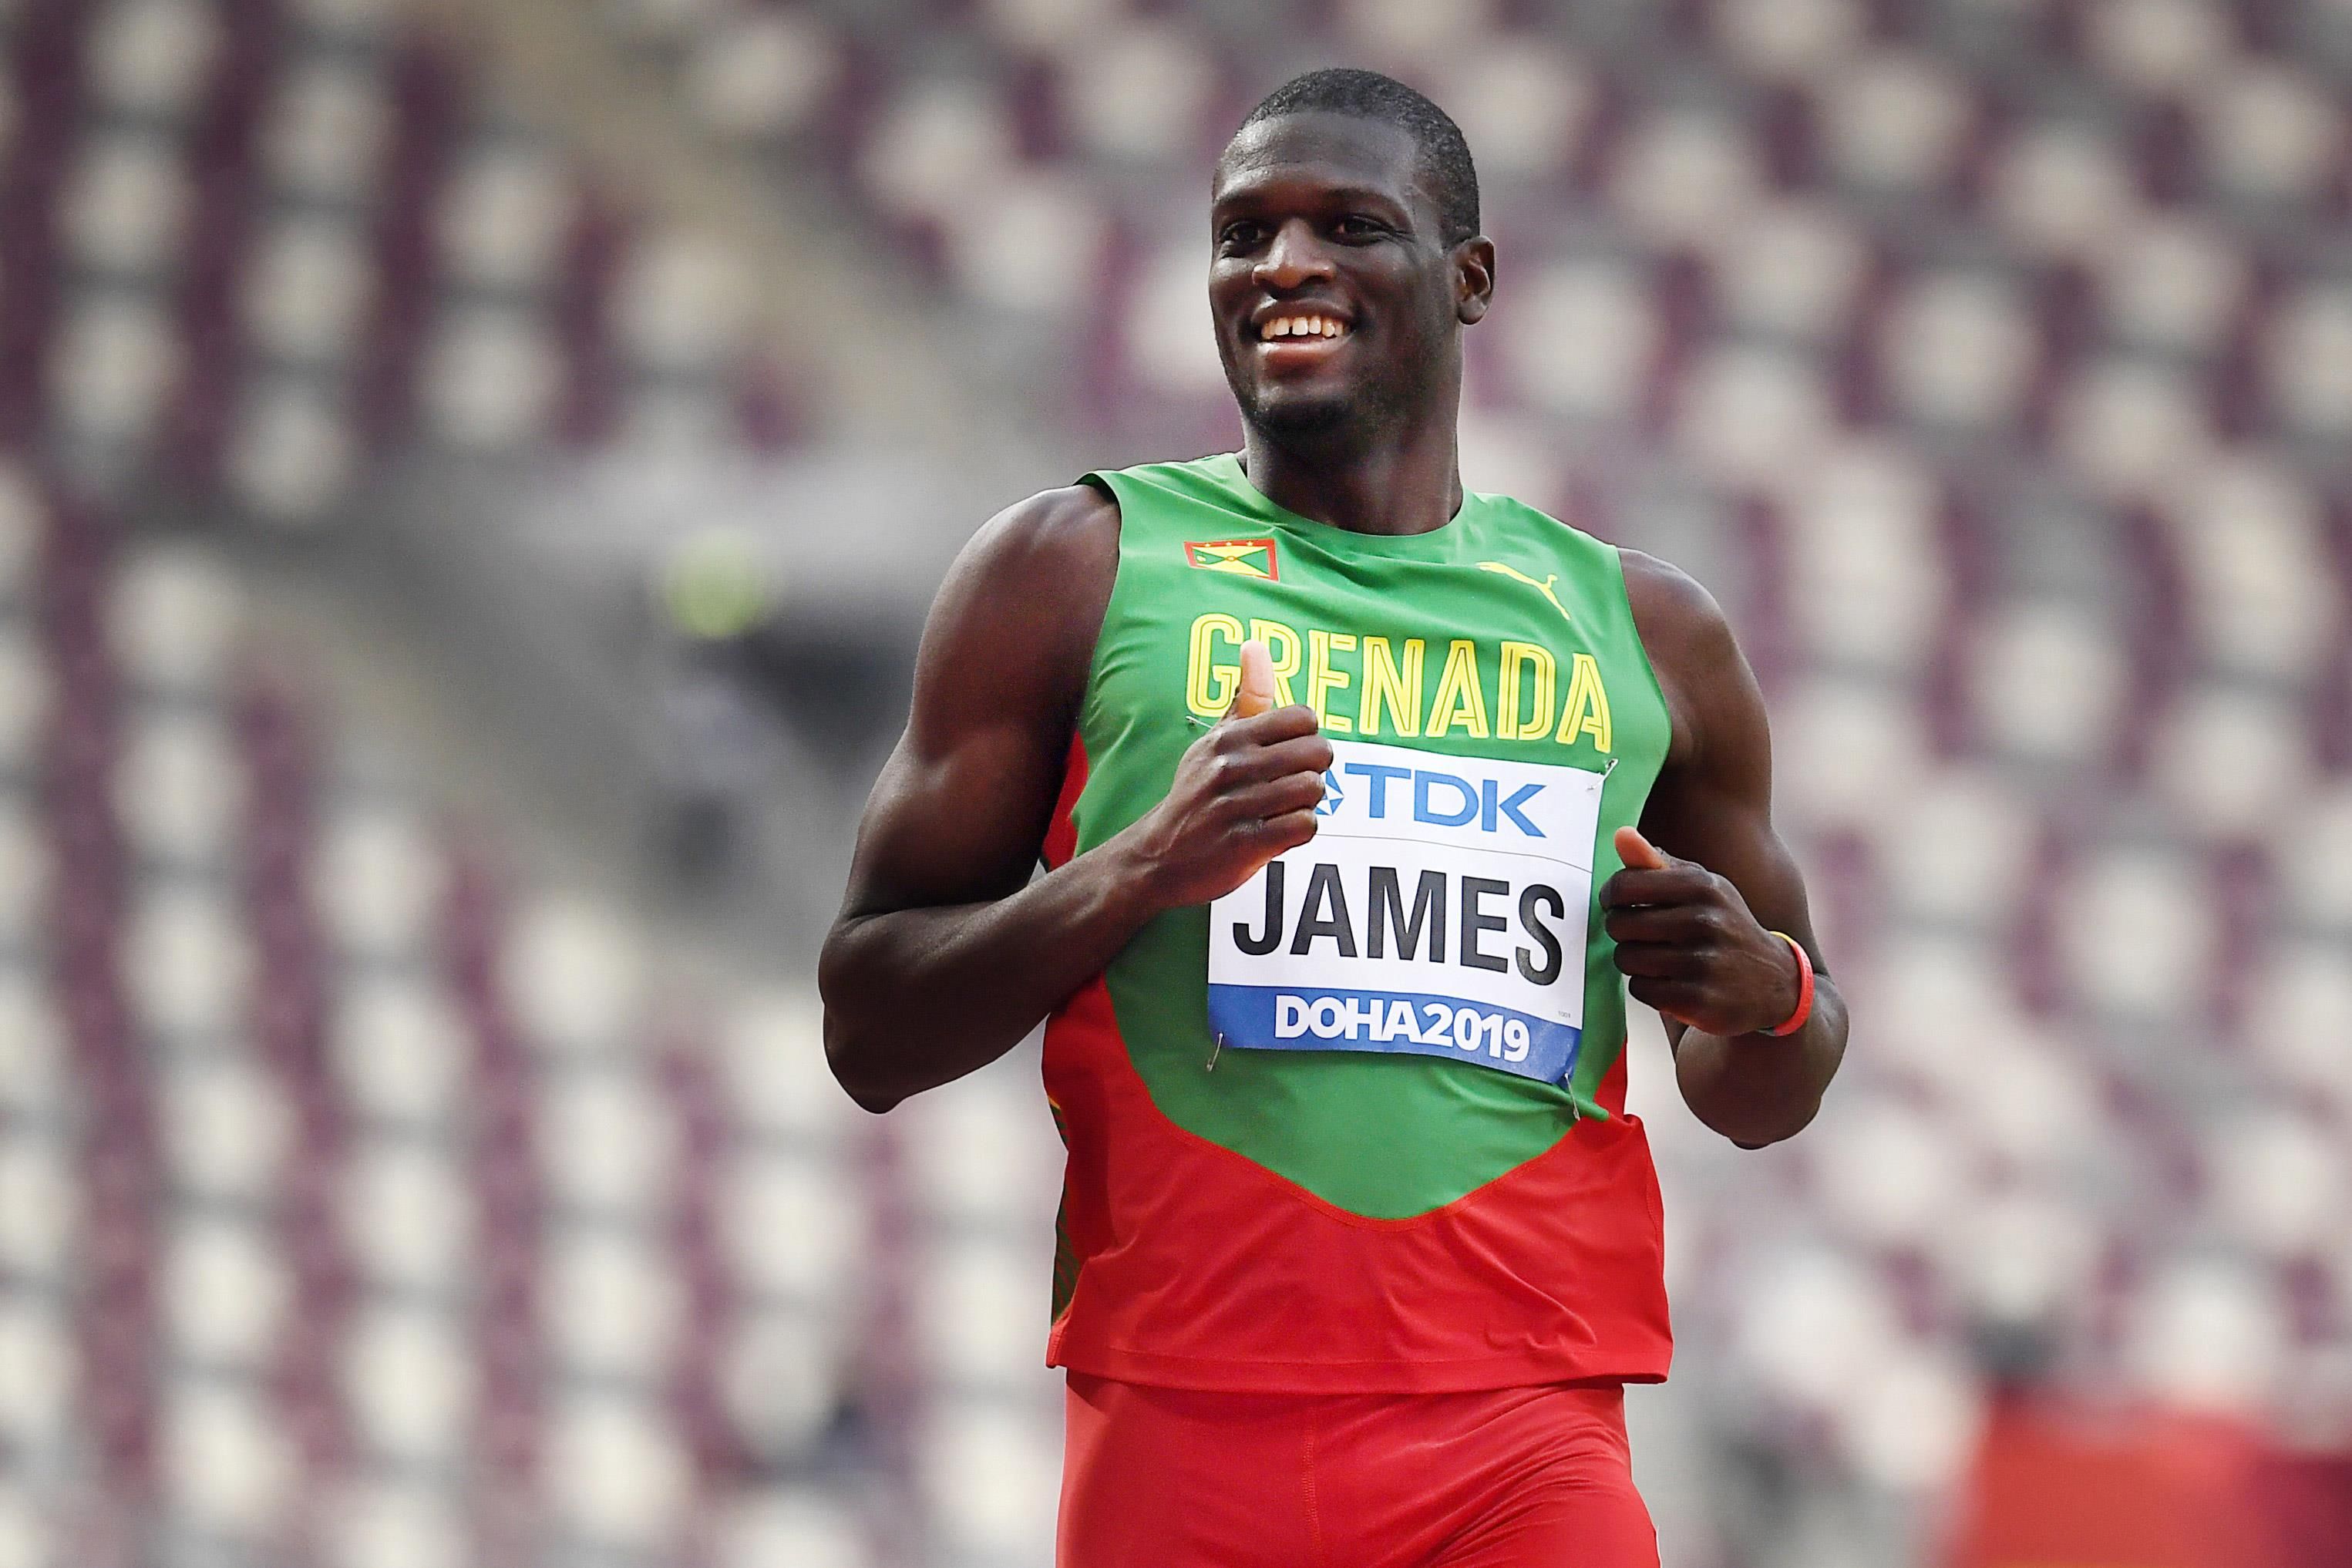 Kirani James in the 400m at the IAAF World Athletics Championships Doha 2019